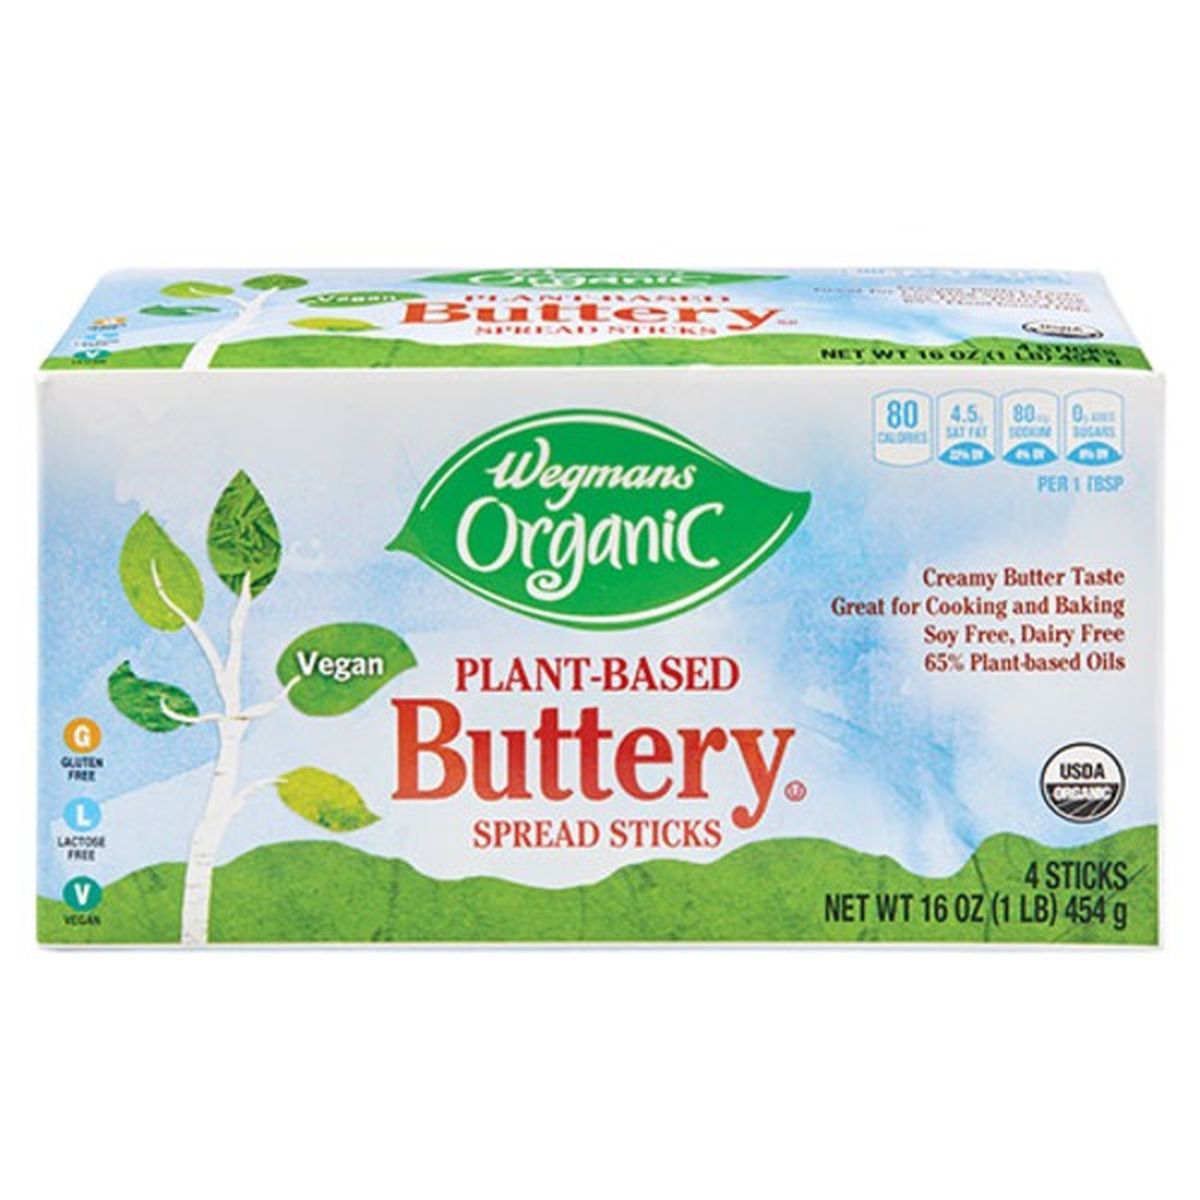 Calories in Wegmans Organic Plant-Based Buttery Spread Sticks, 4 Sticks